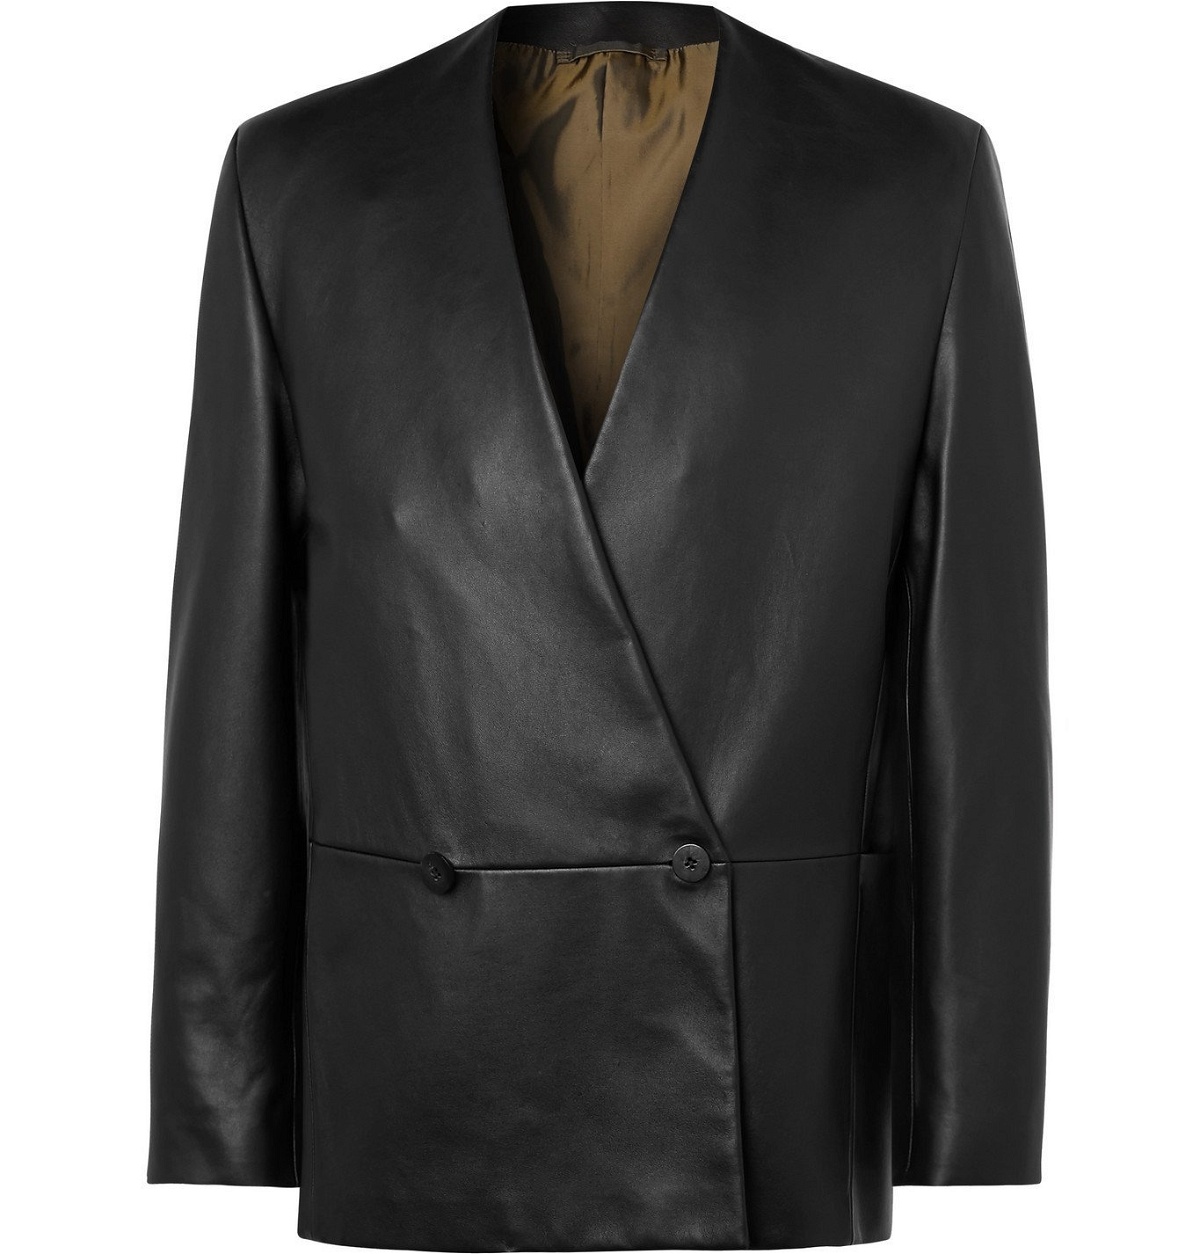 Fear of God for Ermenegildo Zegna - Slim-Fit Double-Breasted Leather Jacket  - Black